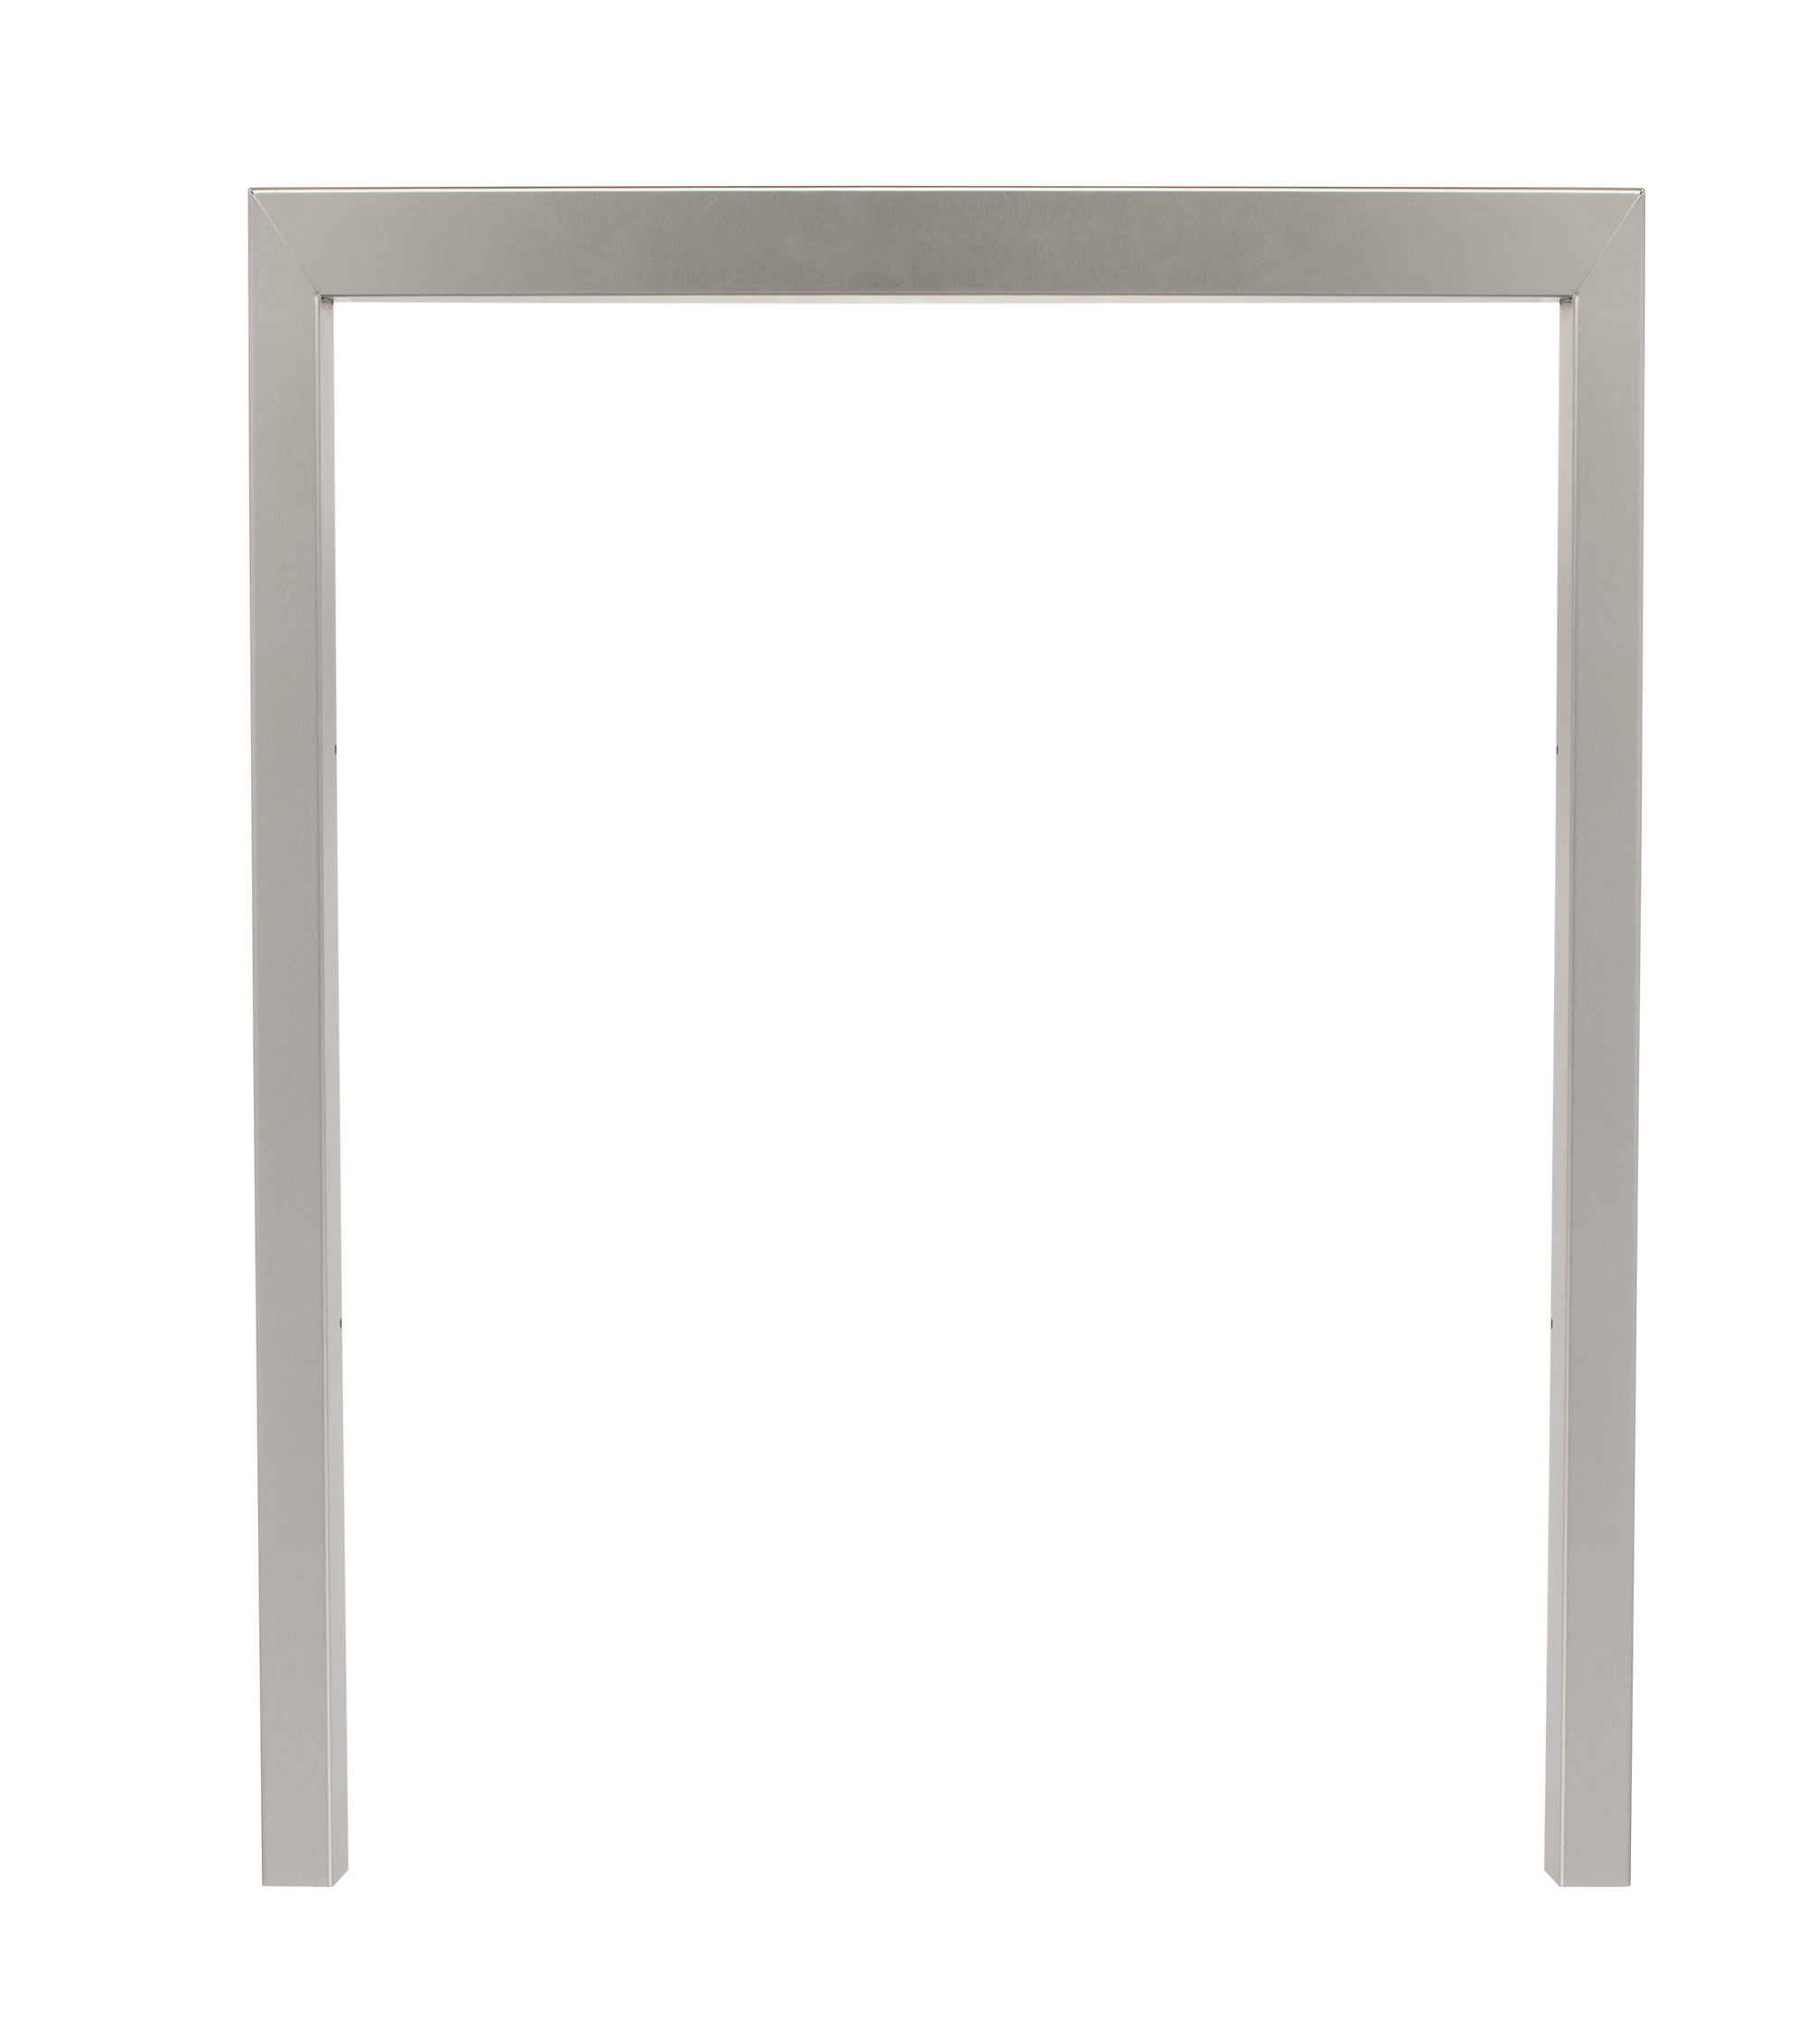 Bull Stainless Steel Refrigerator Finishing Frame with Reveal for Bull Premium Outdoor Rated Fridge